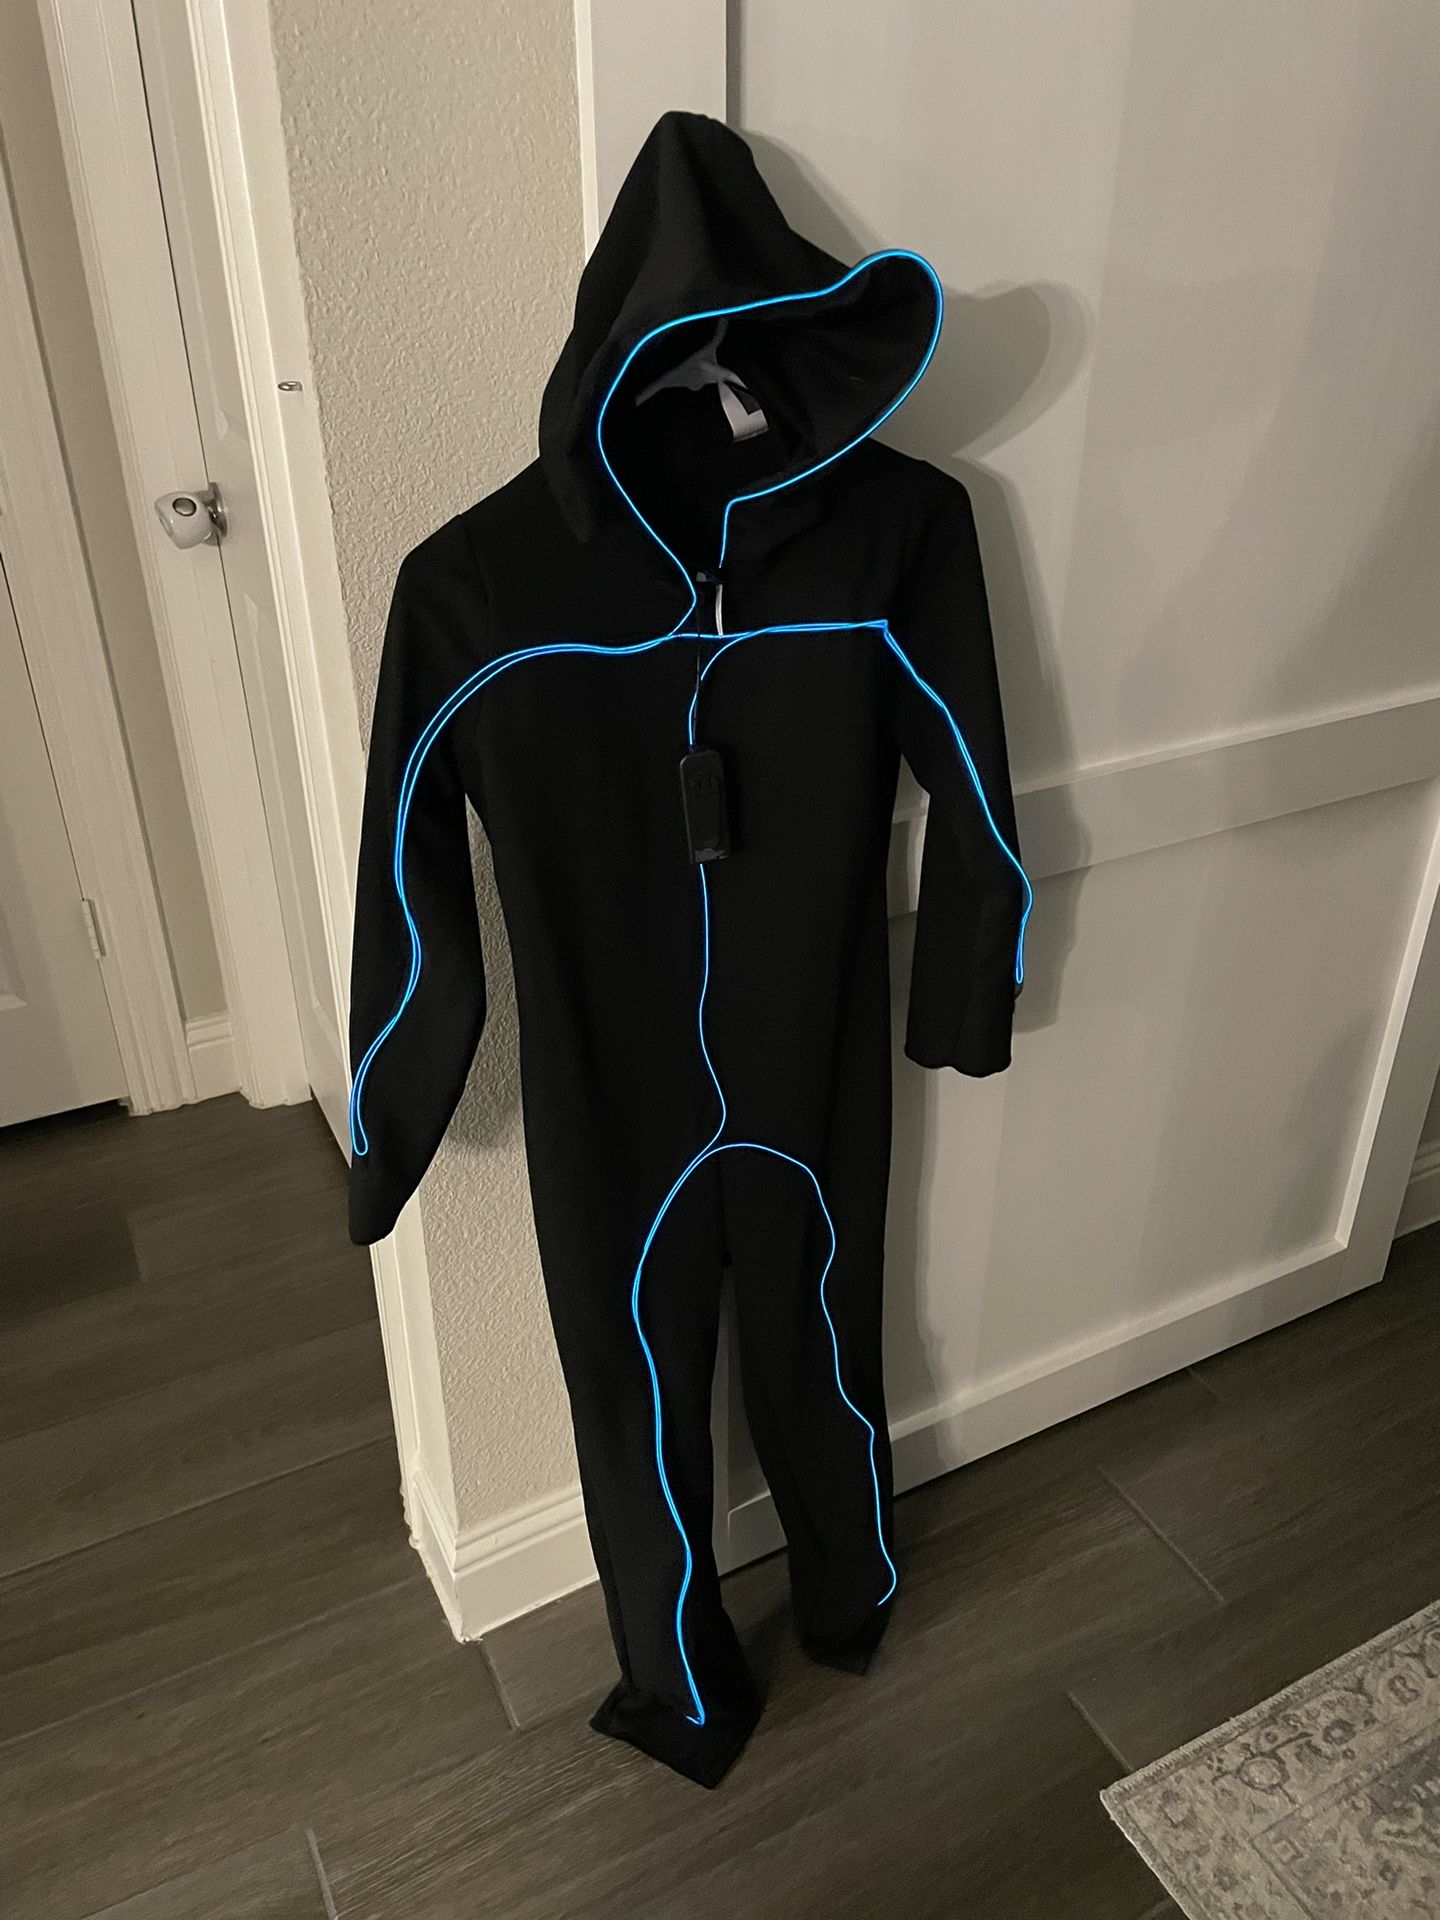 Spirit Halloween Costume - Blue LED Light-Up Stick Figure